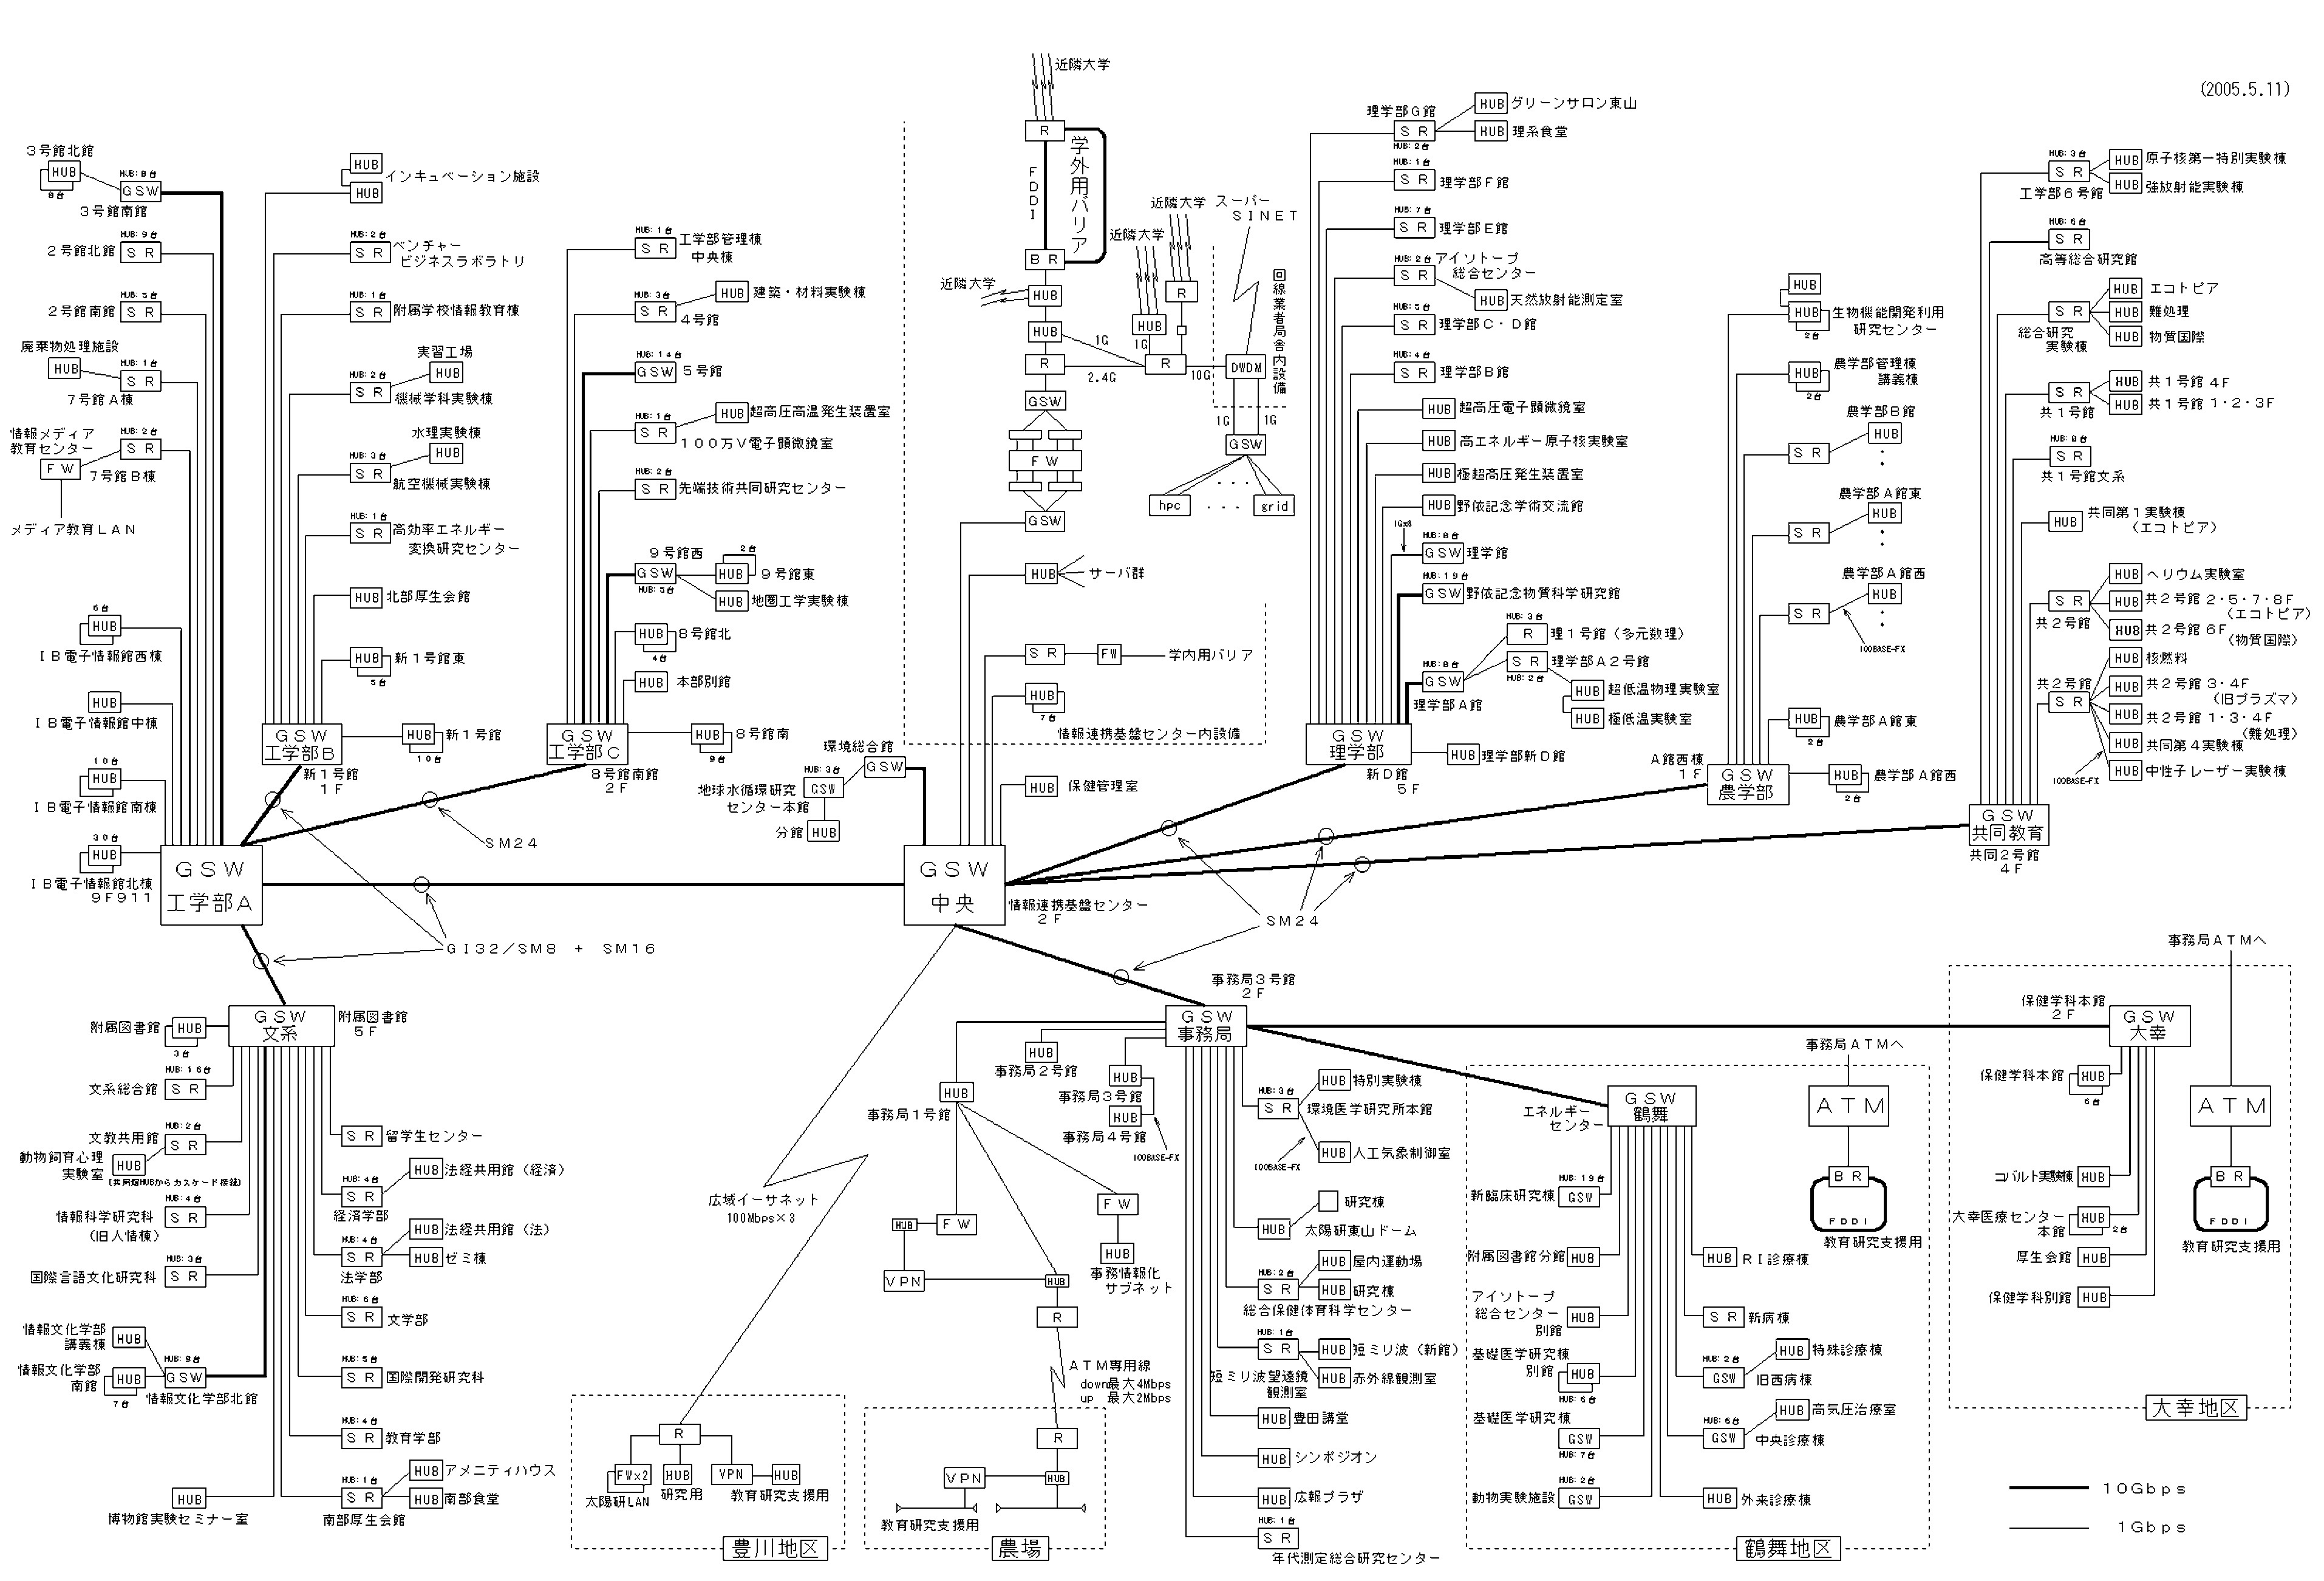 Figure :
Nagoya University campus network system